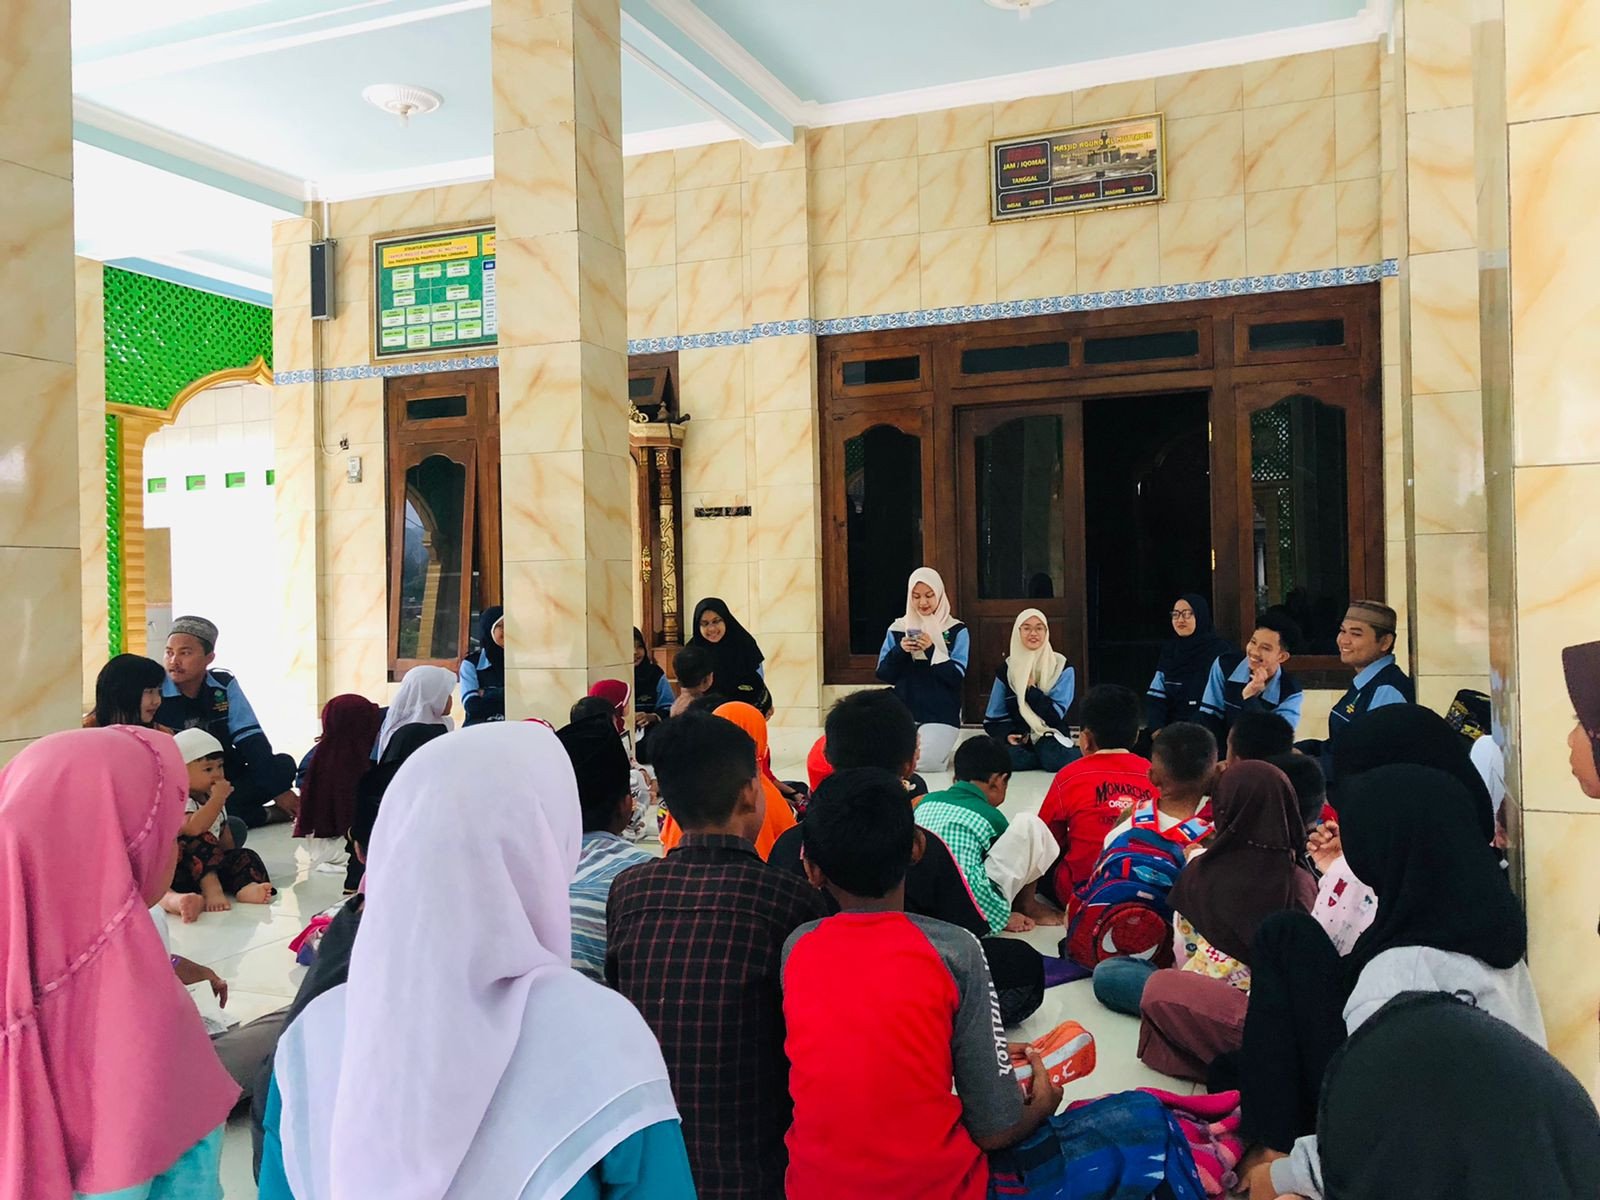 Antusias Warga Desa Pagertoyo Dalam Mendirikan Ulang MDA (Madrasah Dhiniyah Awwaliyyah)